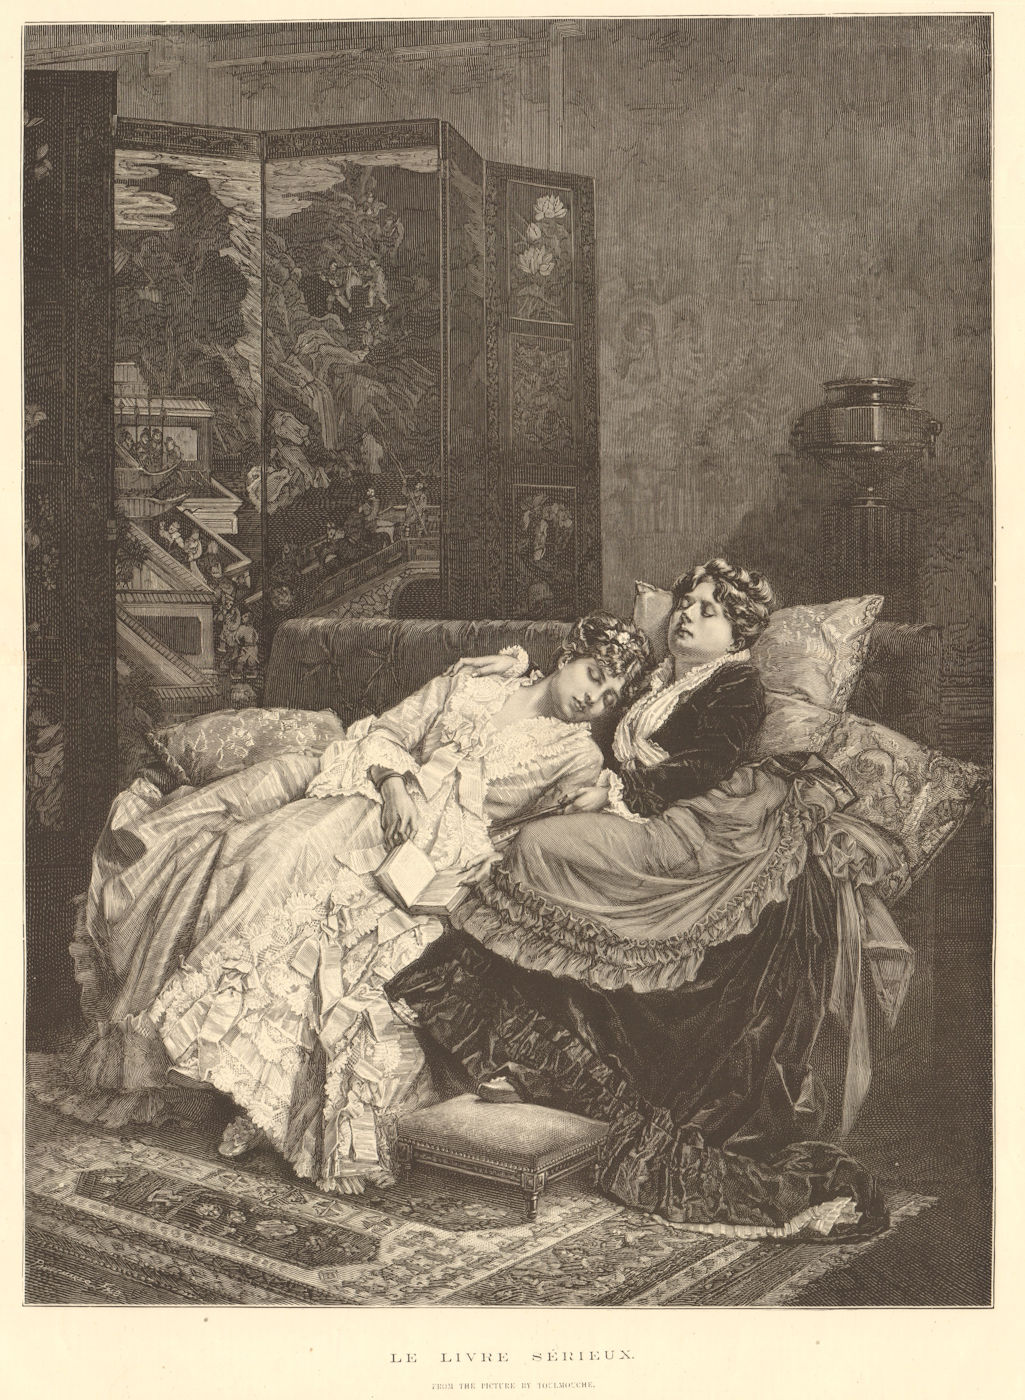 Associate Product Le livre serieux, by Toulmouche. Asleep reading book 1874 old antique print